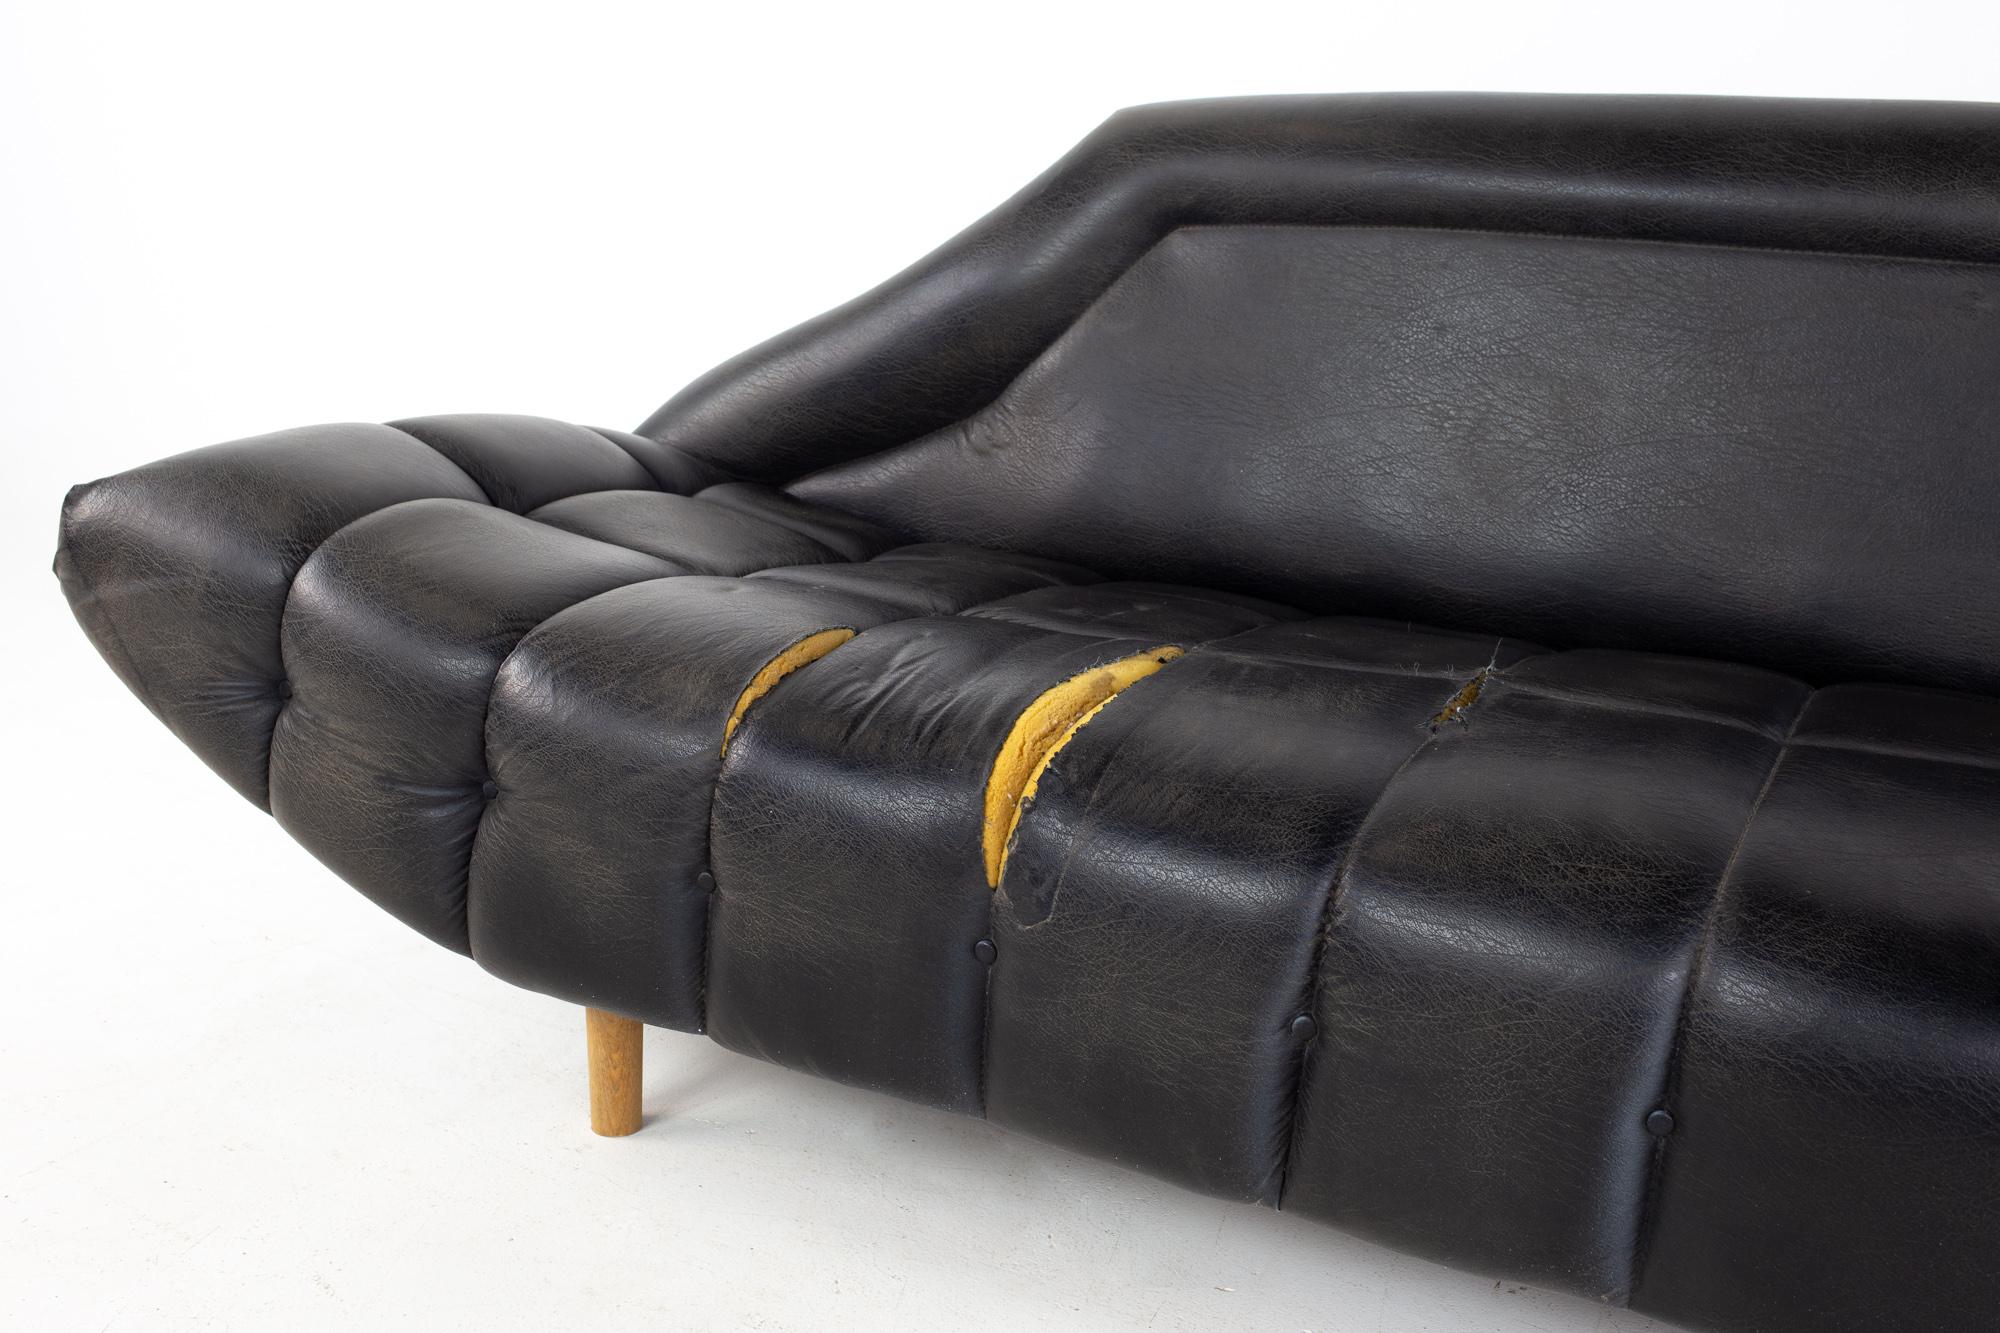 Upholstery Adrian Pearsall Style Kroehler Mid Century Gondola Sofa